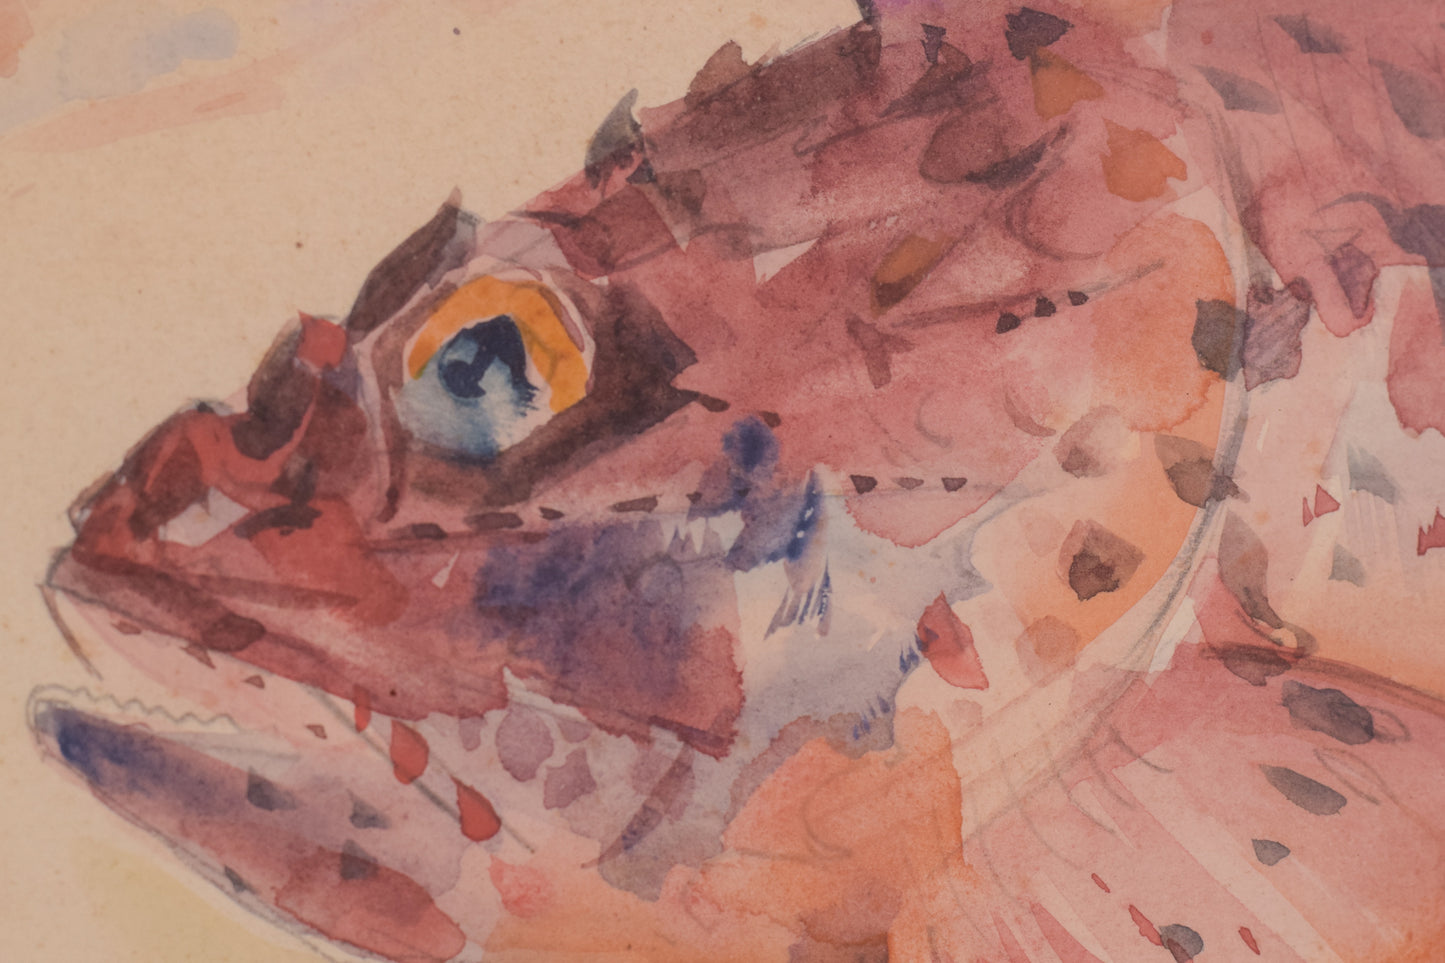 Oleguer Junyent i Sans - Watercolour Fishes